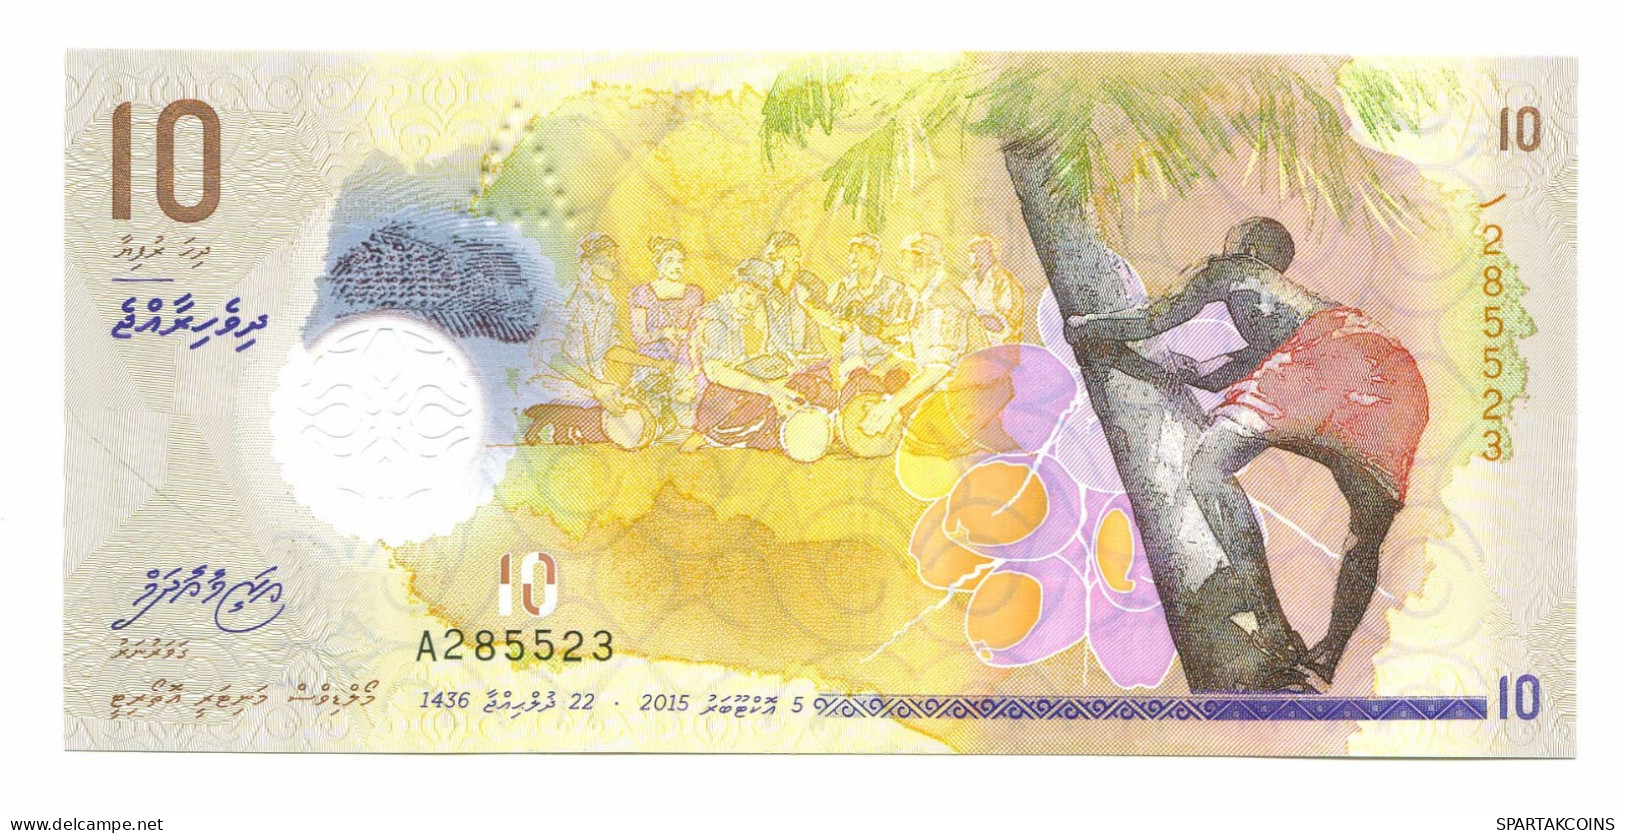 MALDIVES 10 RUFIYAA 2015(2016) POLYMER NOTE UNC P10966.2 - [11] Local Banknote Issues